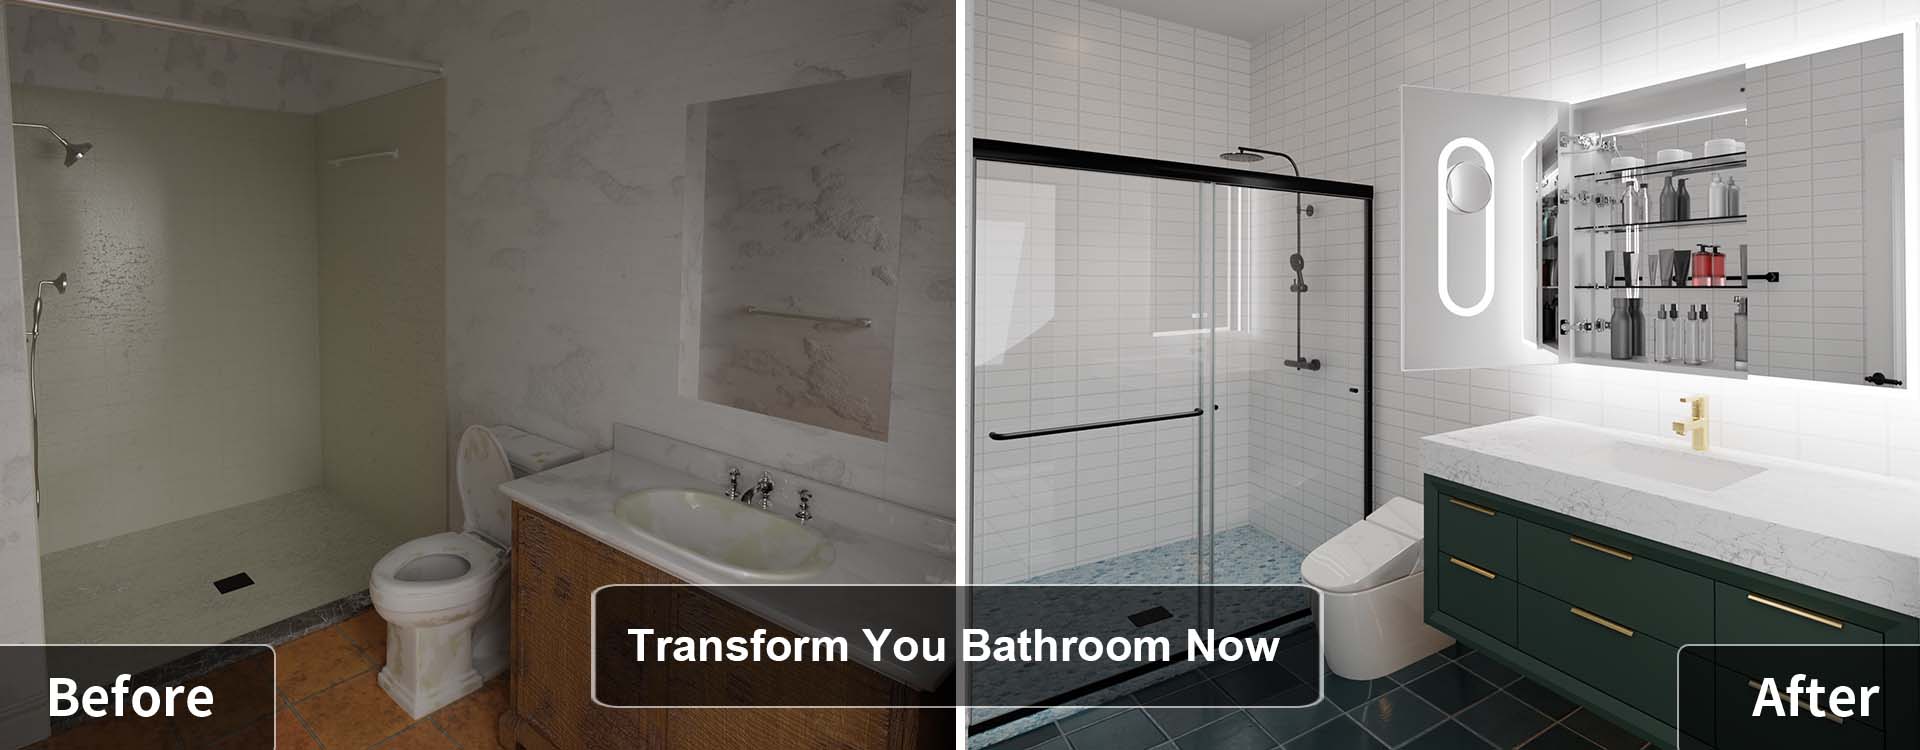 bathroom medicine cabinets with mirror-bathroom vanity mirrors-bathtub for shower-bathroom glass shower doors